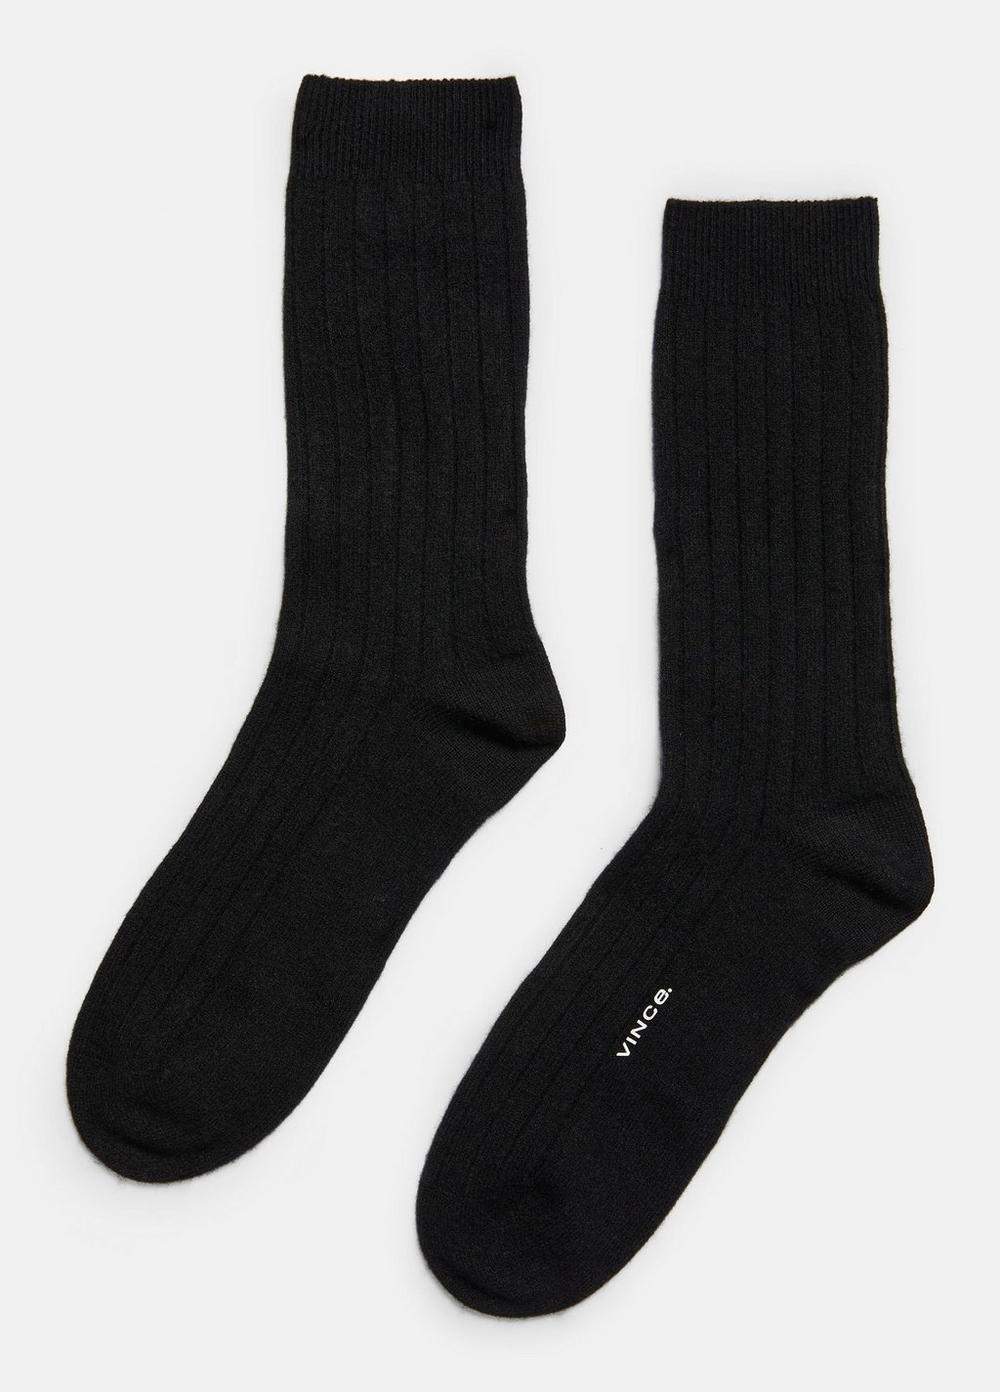 Cashmere Rib Sock, Black, Size L/XL Vince